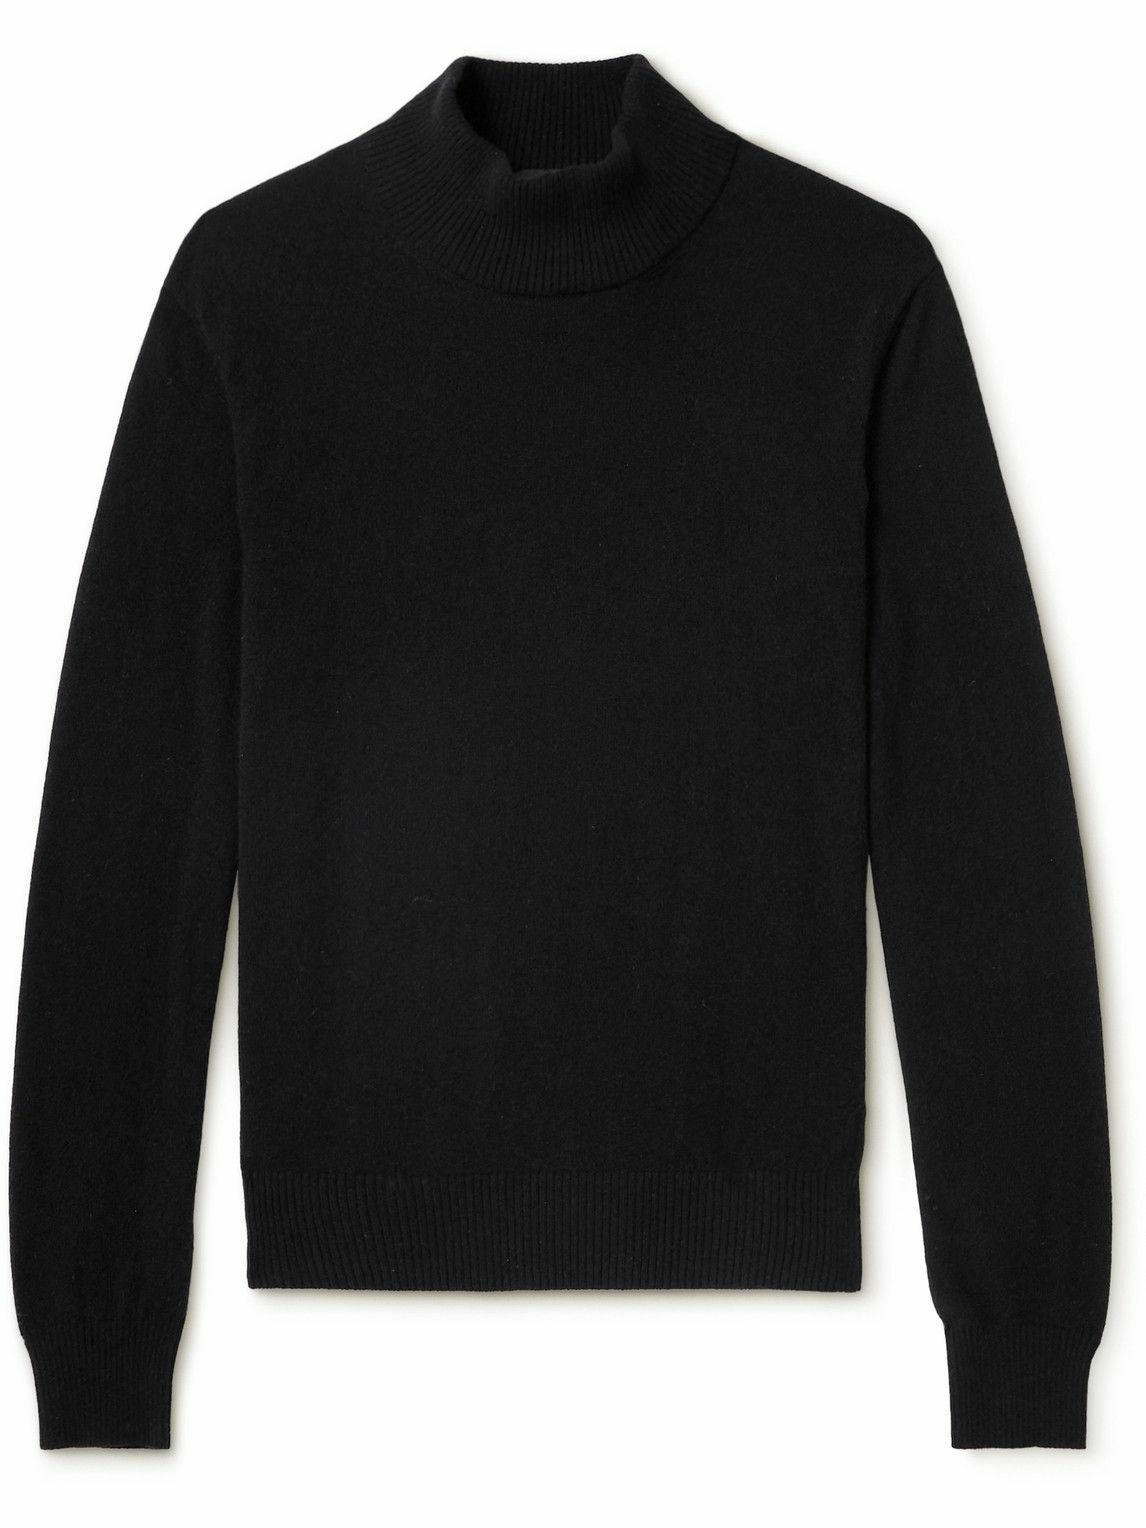 Photo: TOM FORD - Cashmere Mock-Neck Sweater - Black